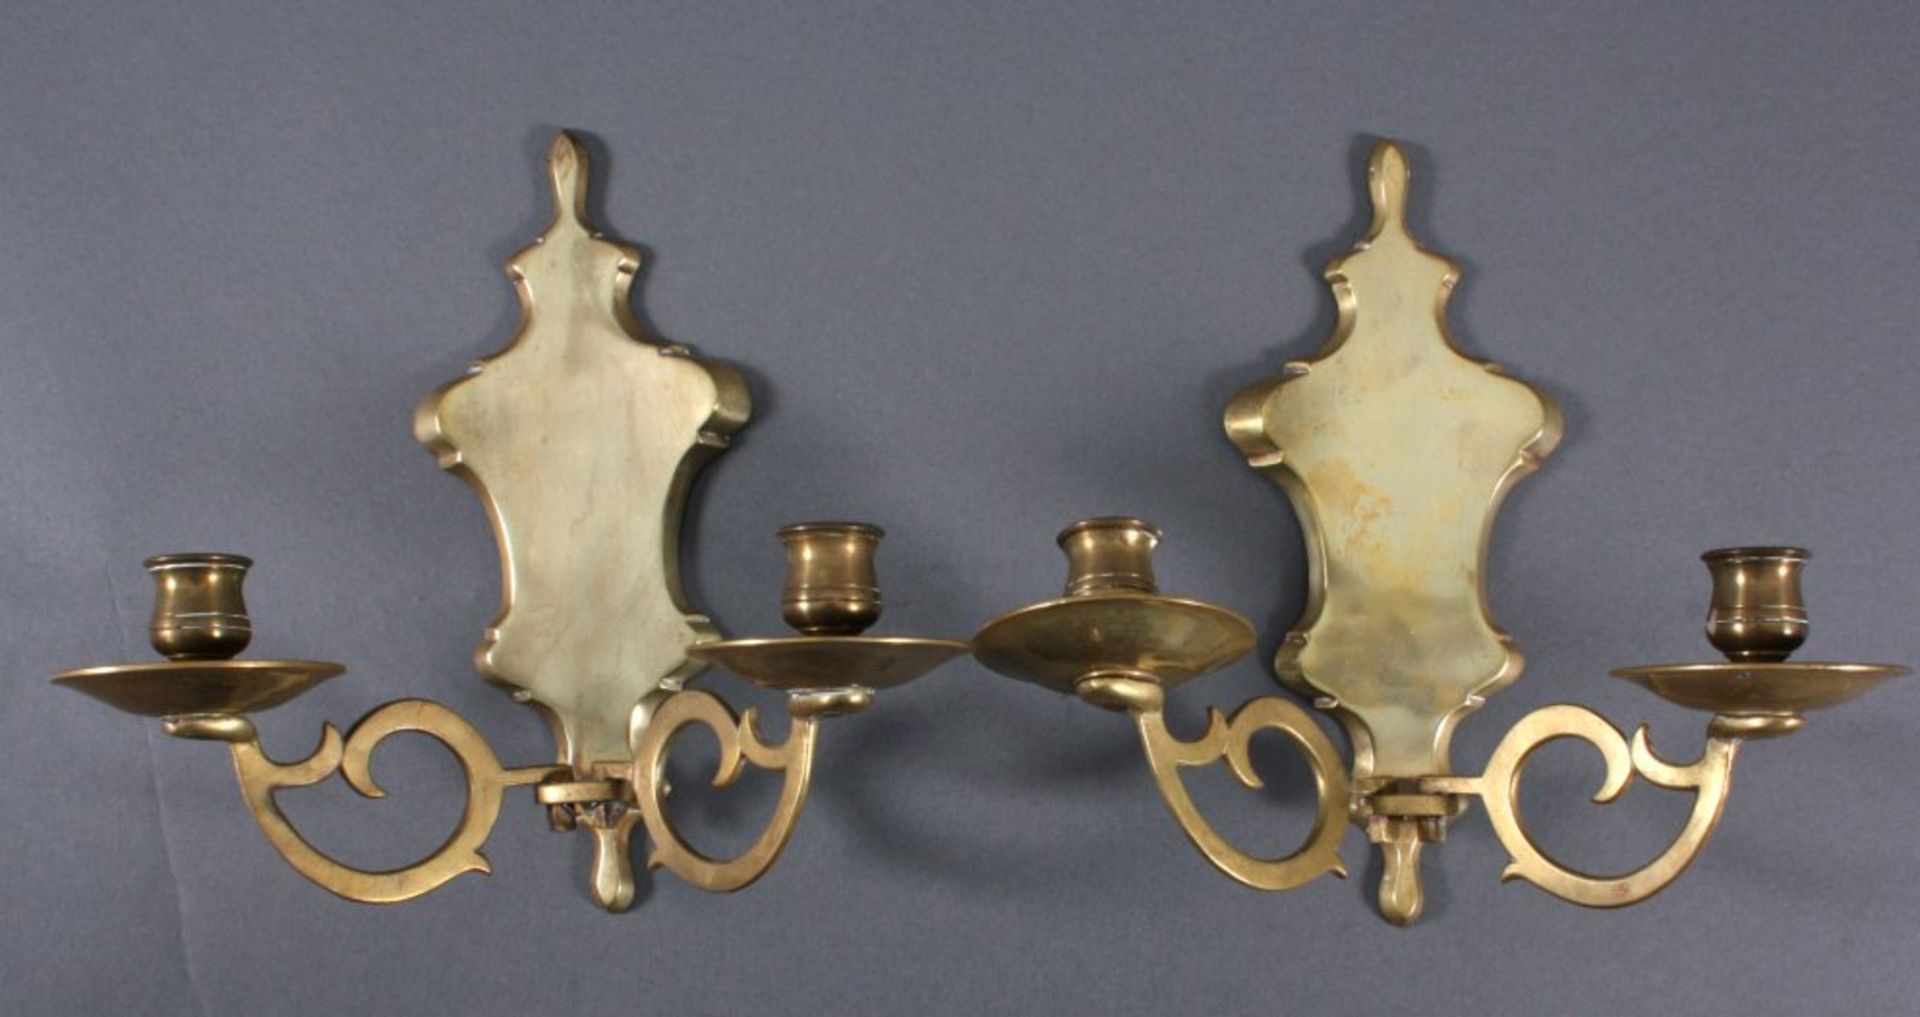 Paar Kerzenhalter um 19002-flammig, aus Messing gefertigt, ca. Höhe 25, Breite 27 cm